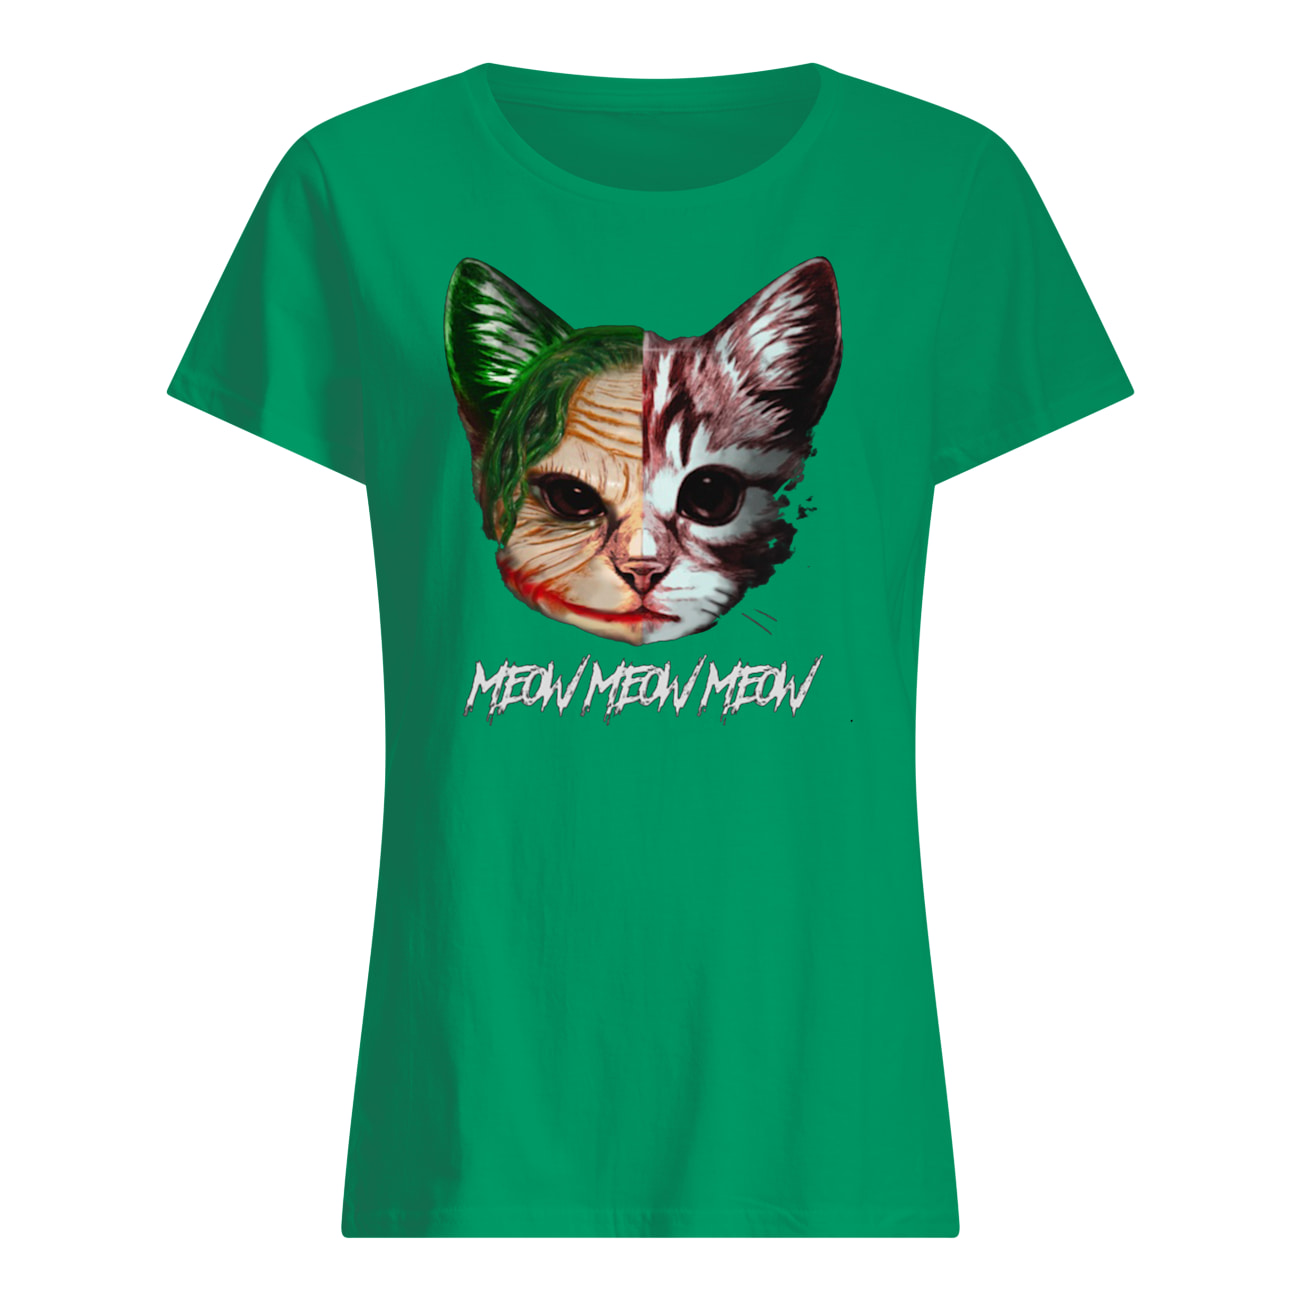 Meow meow meow cat joker womens shirt